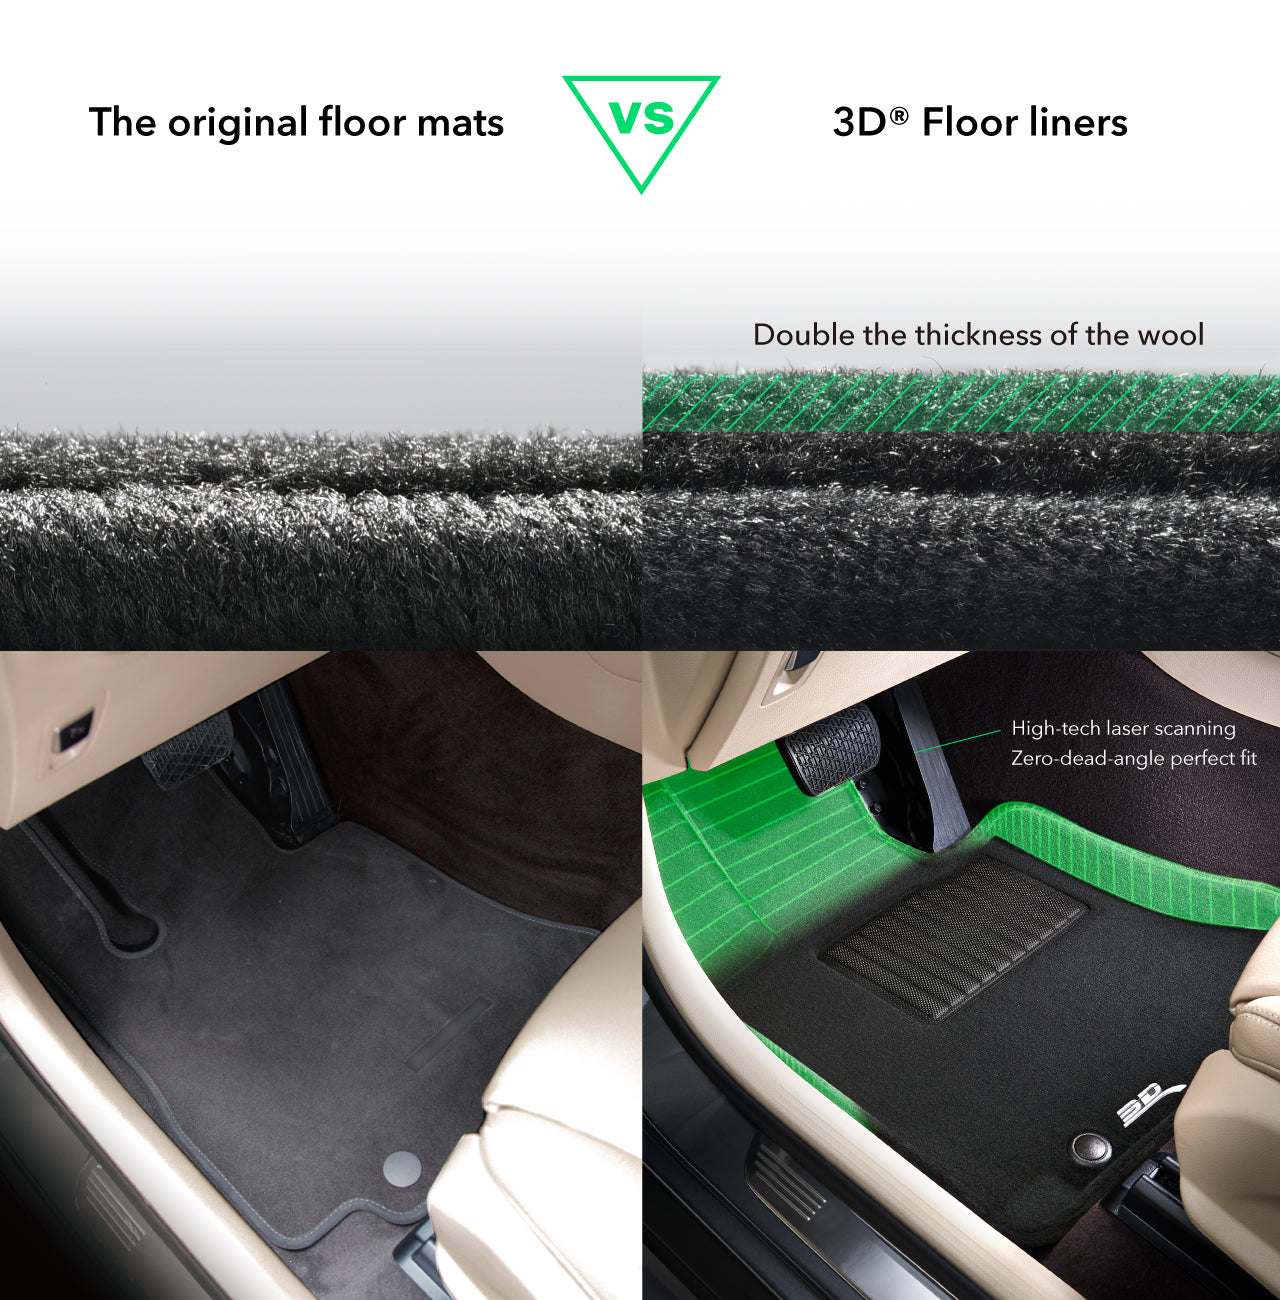 Floor Mats - Laser measured Floor Mats For Perfect Fit